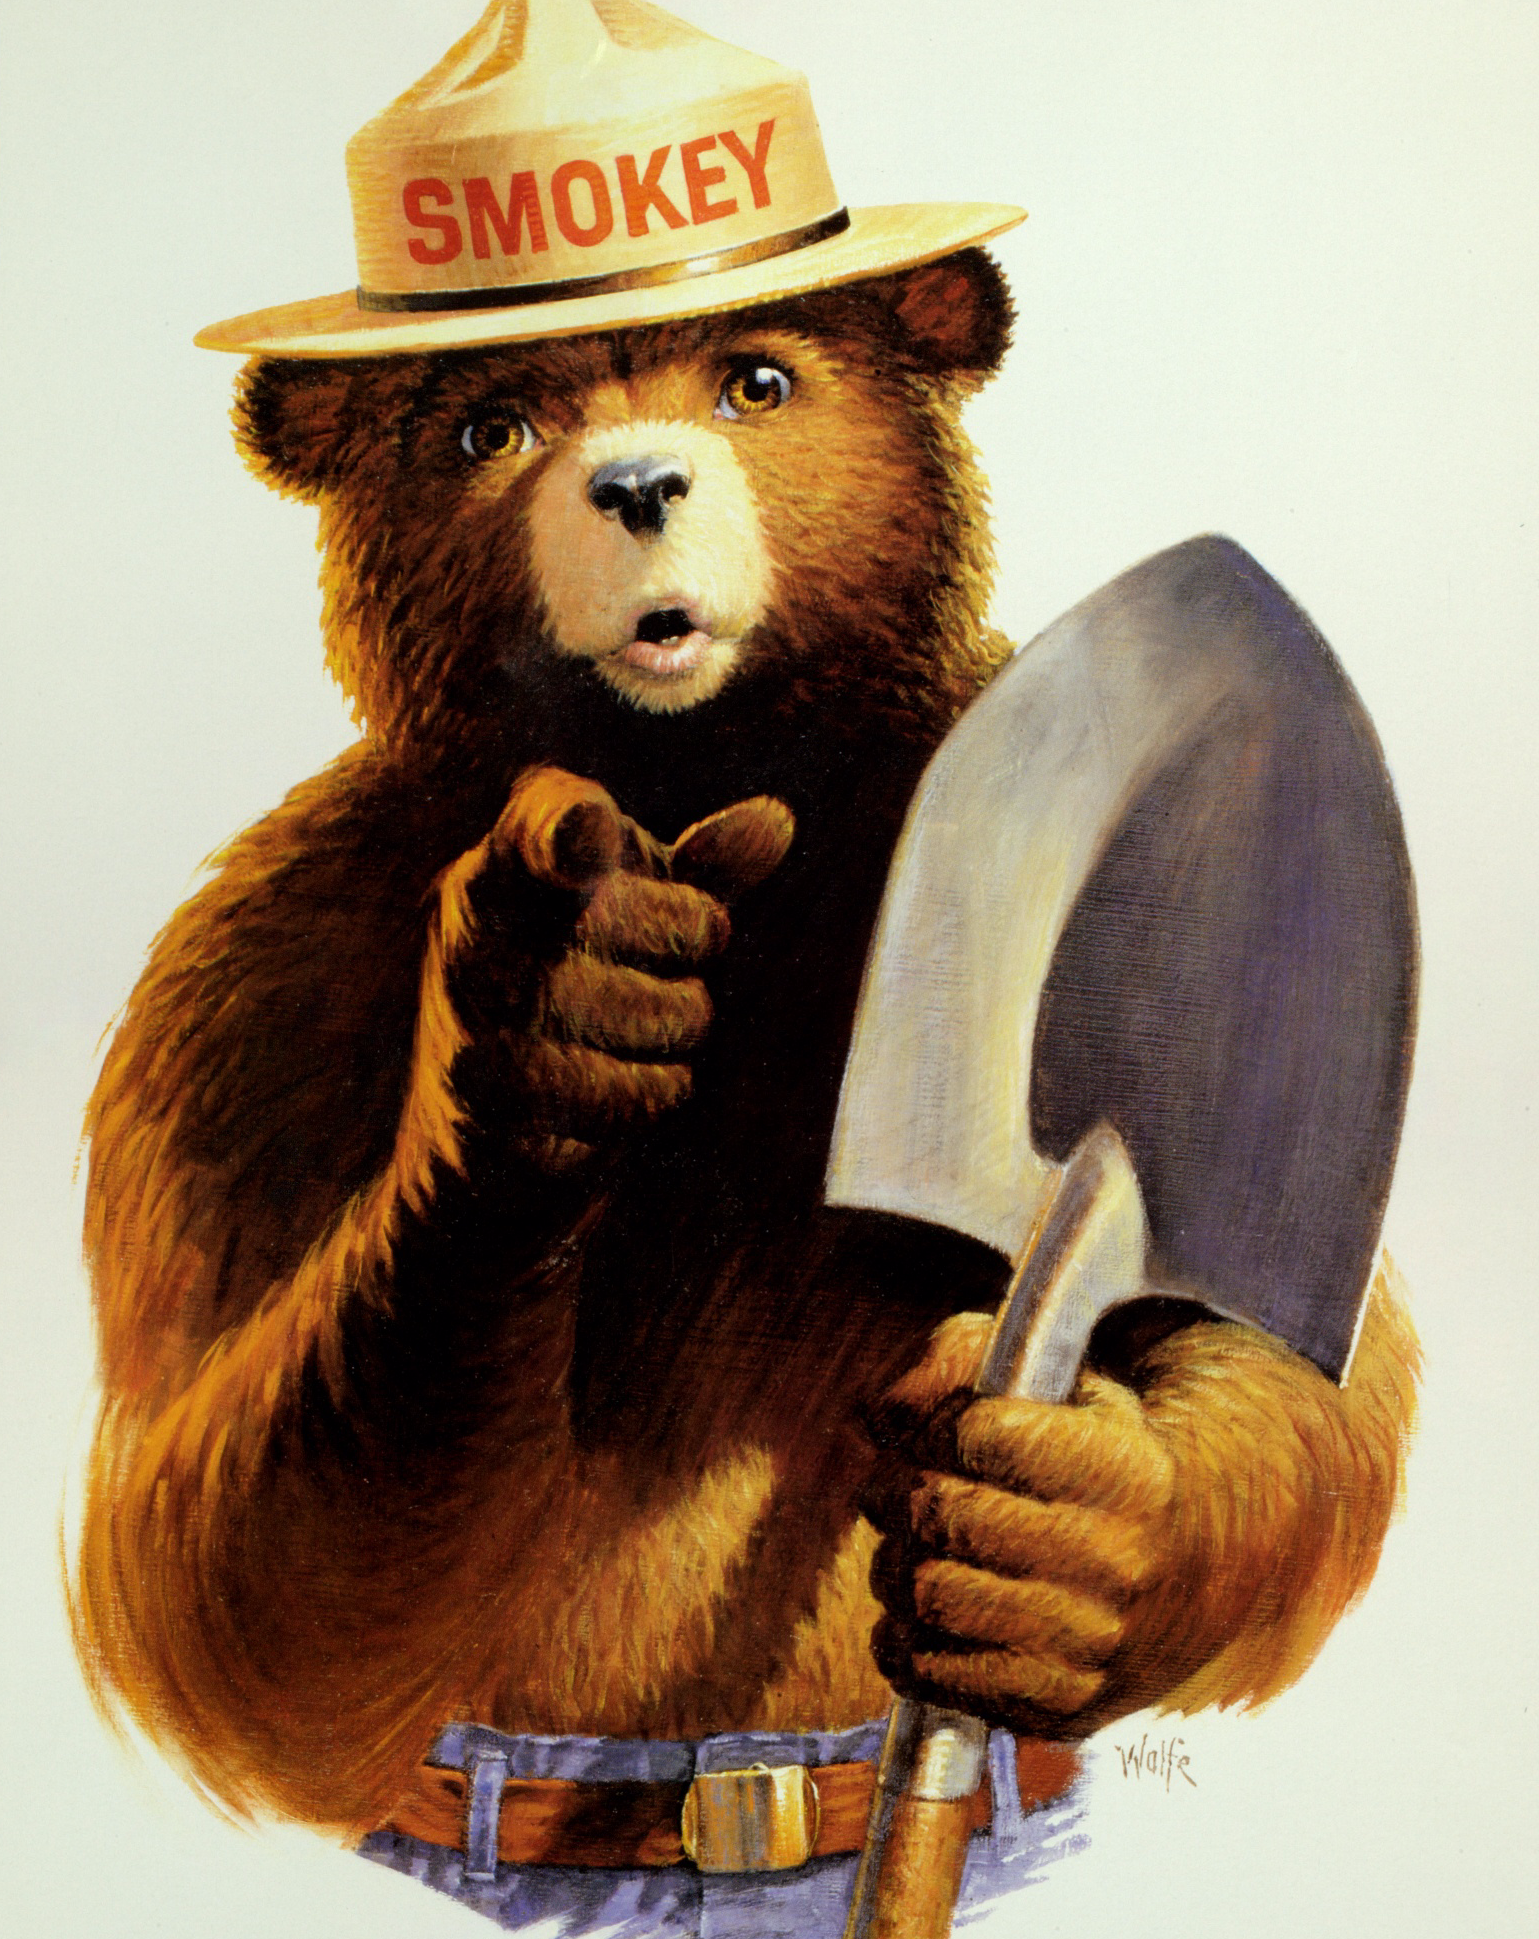 Smokey The Bear Memes - Imgflip